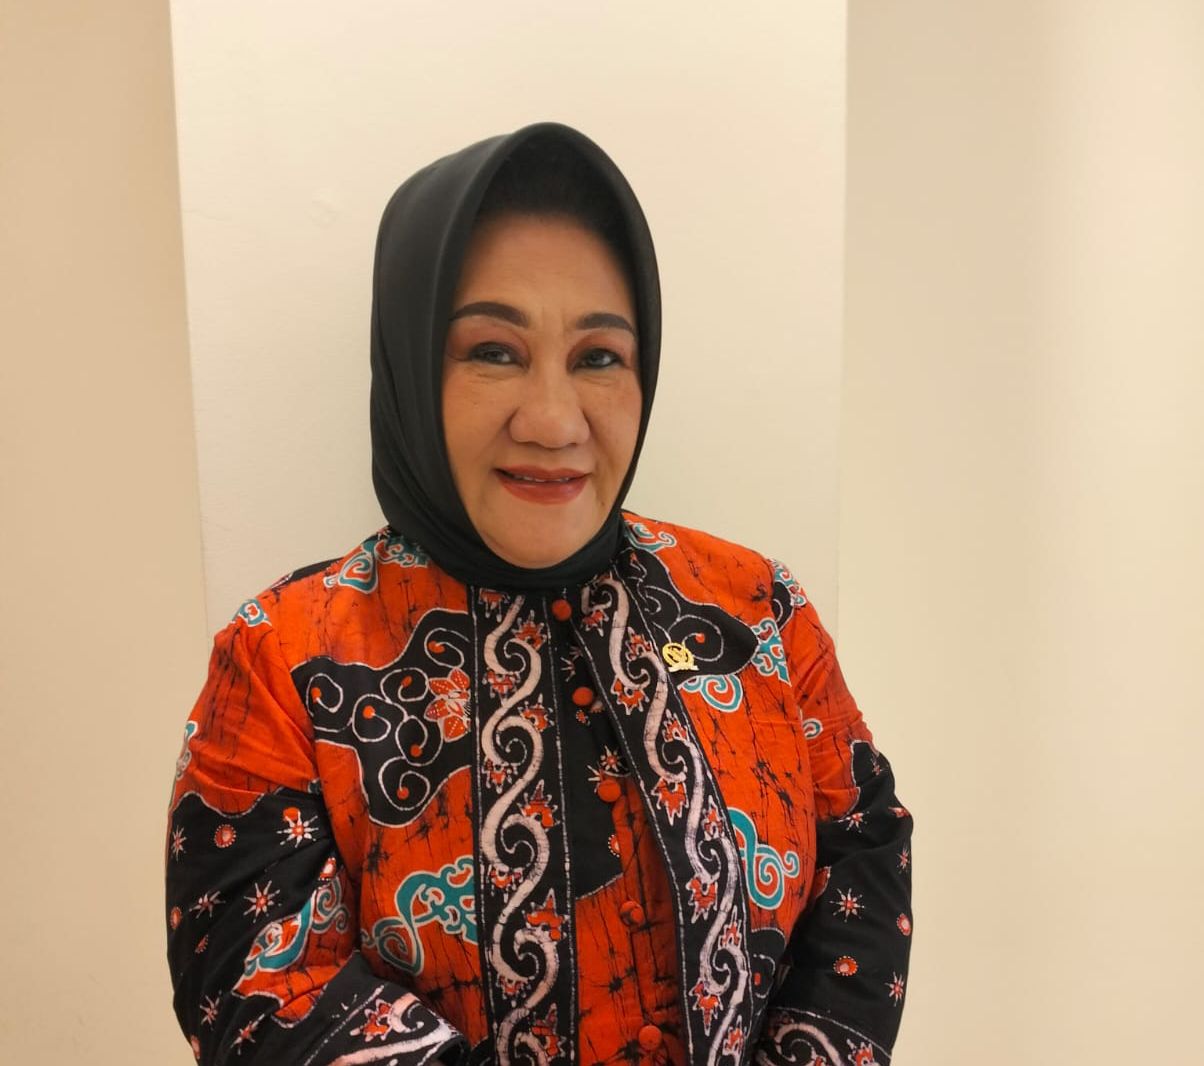 Anggota DPR RI Komisi X, Tina Nur Alam Cagub Sultra